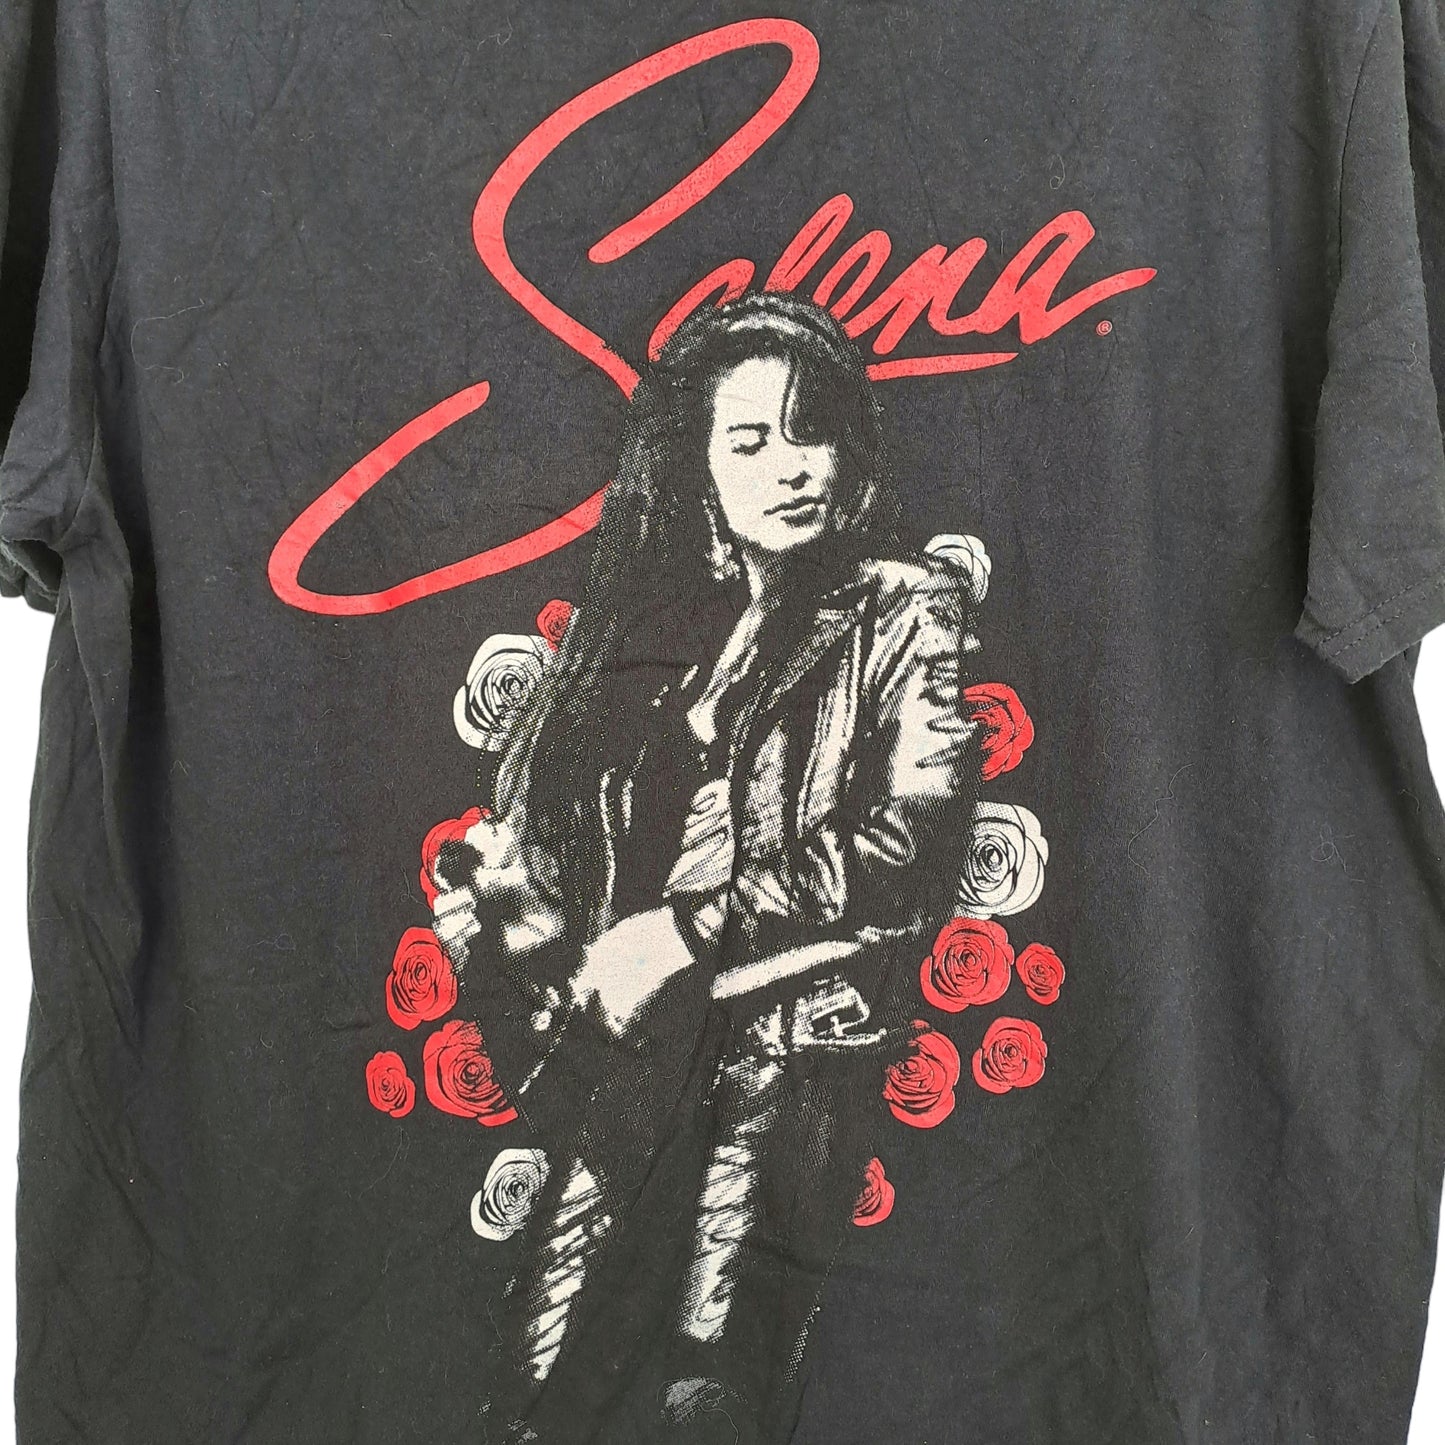 Selena T-shirt